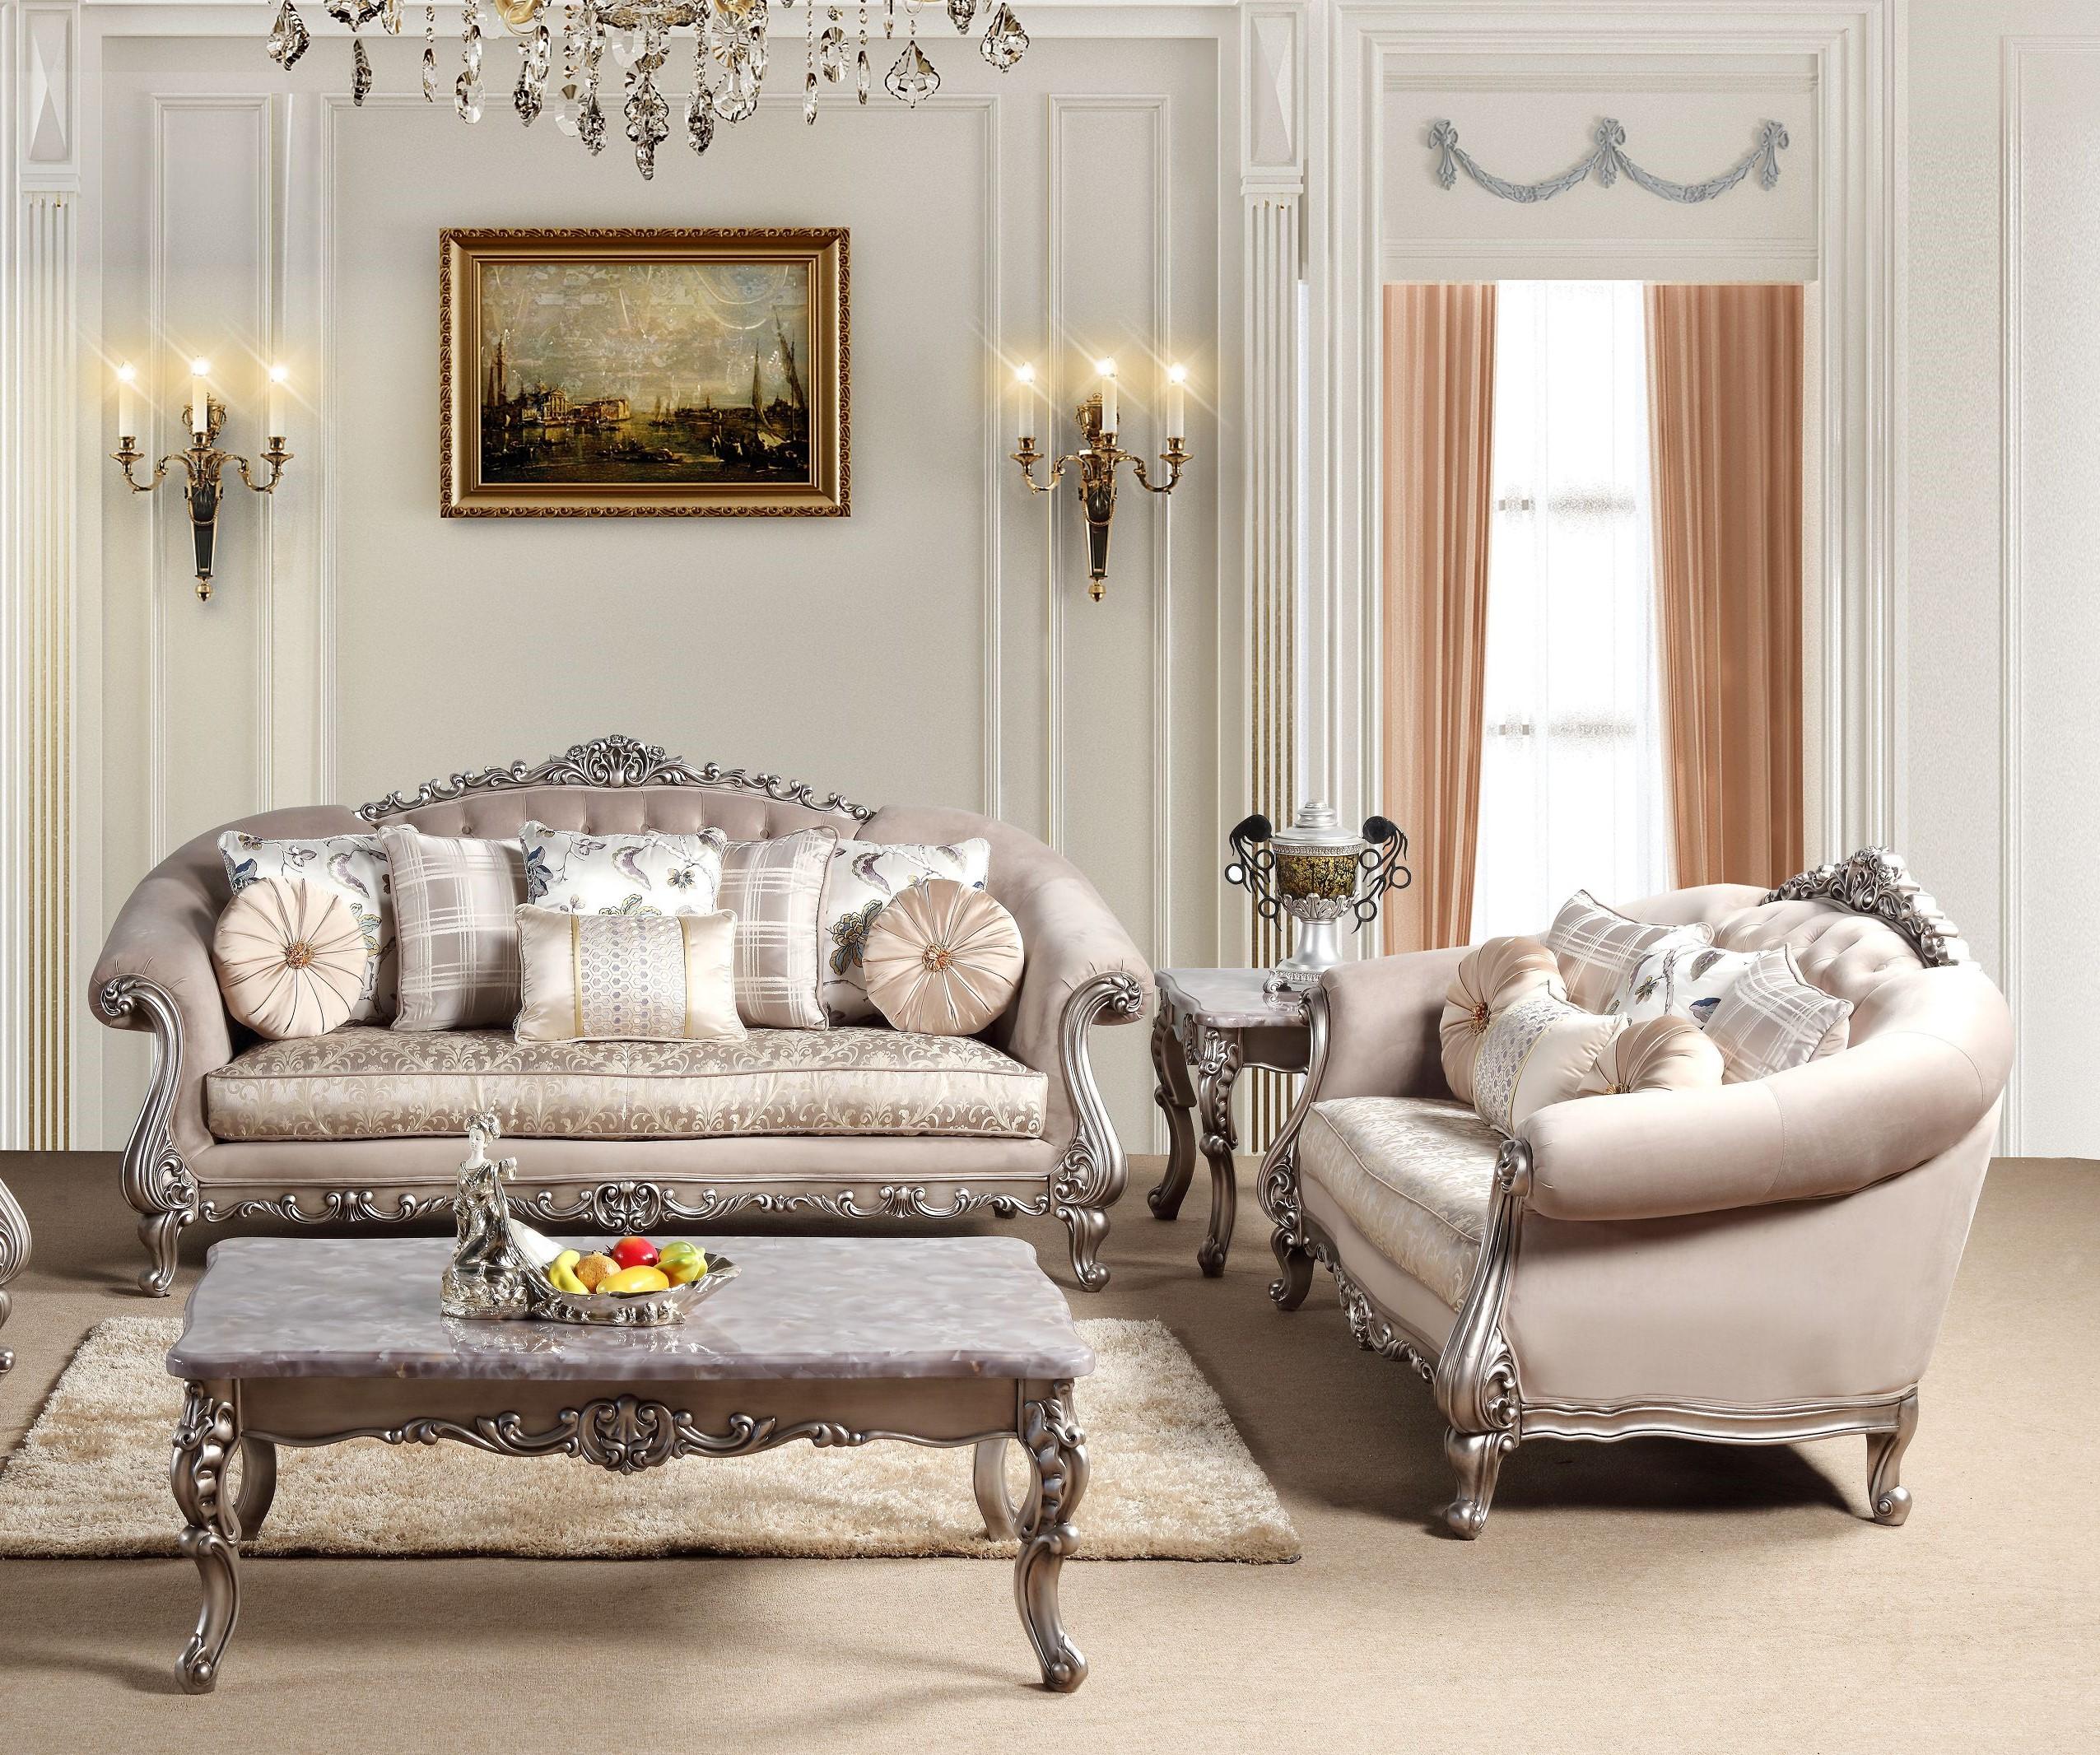 https://nyfurnitureoutlets.com/products/beige-fabric-silver-finish-wood-sofa-set-2pcs-traditional-cosmos-furniture-cristina/1x1/238874-1-019116388501.jpg